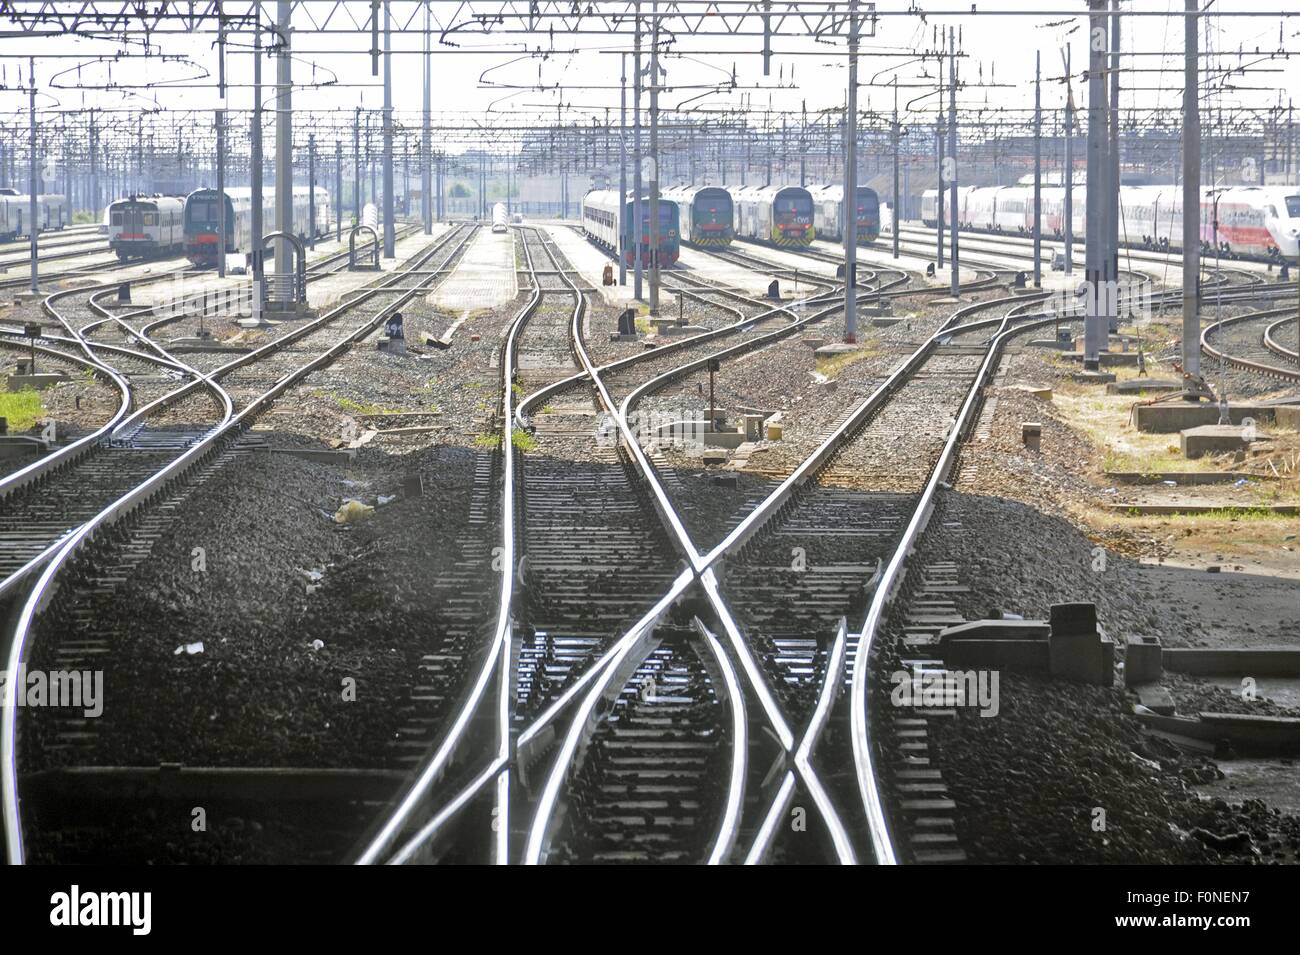 Trenord, regional railways of Lombardy region (Italy), depot and workshops of Milano Fiorenza Stock Photo